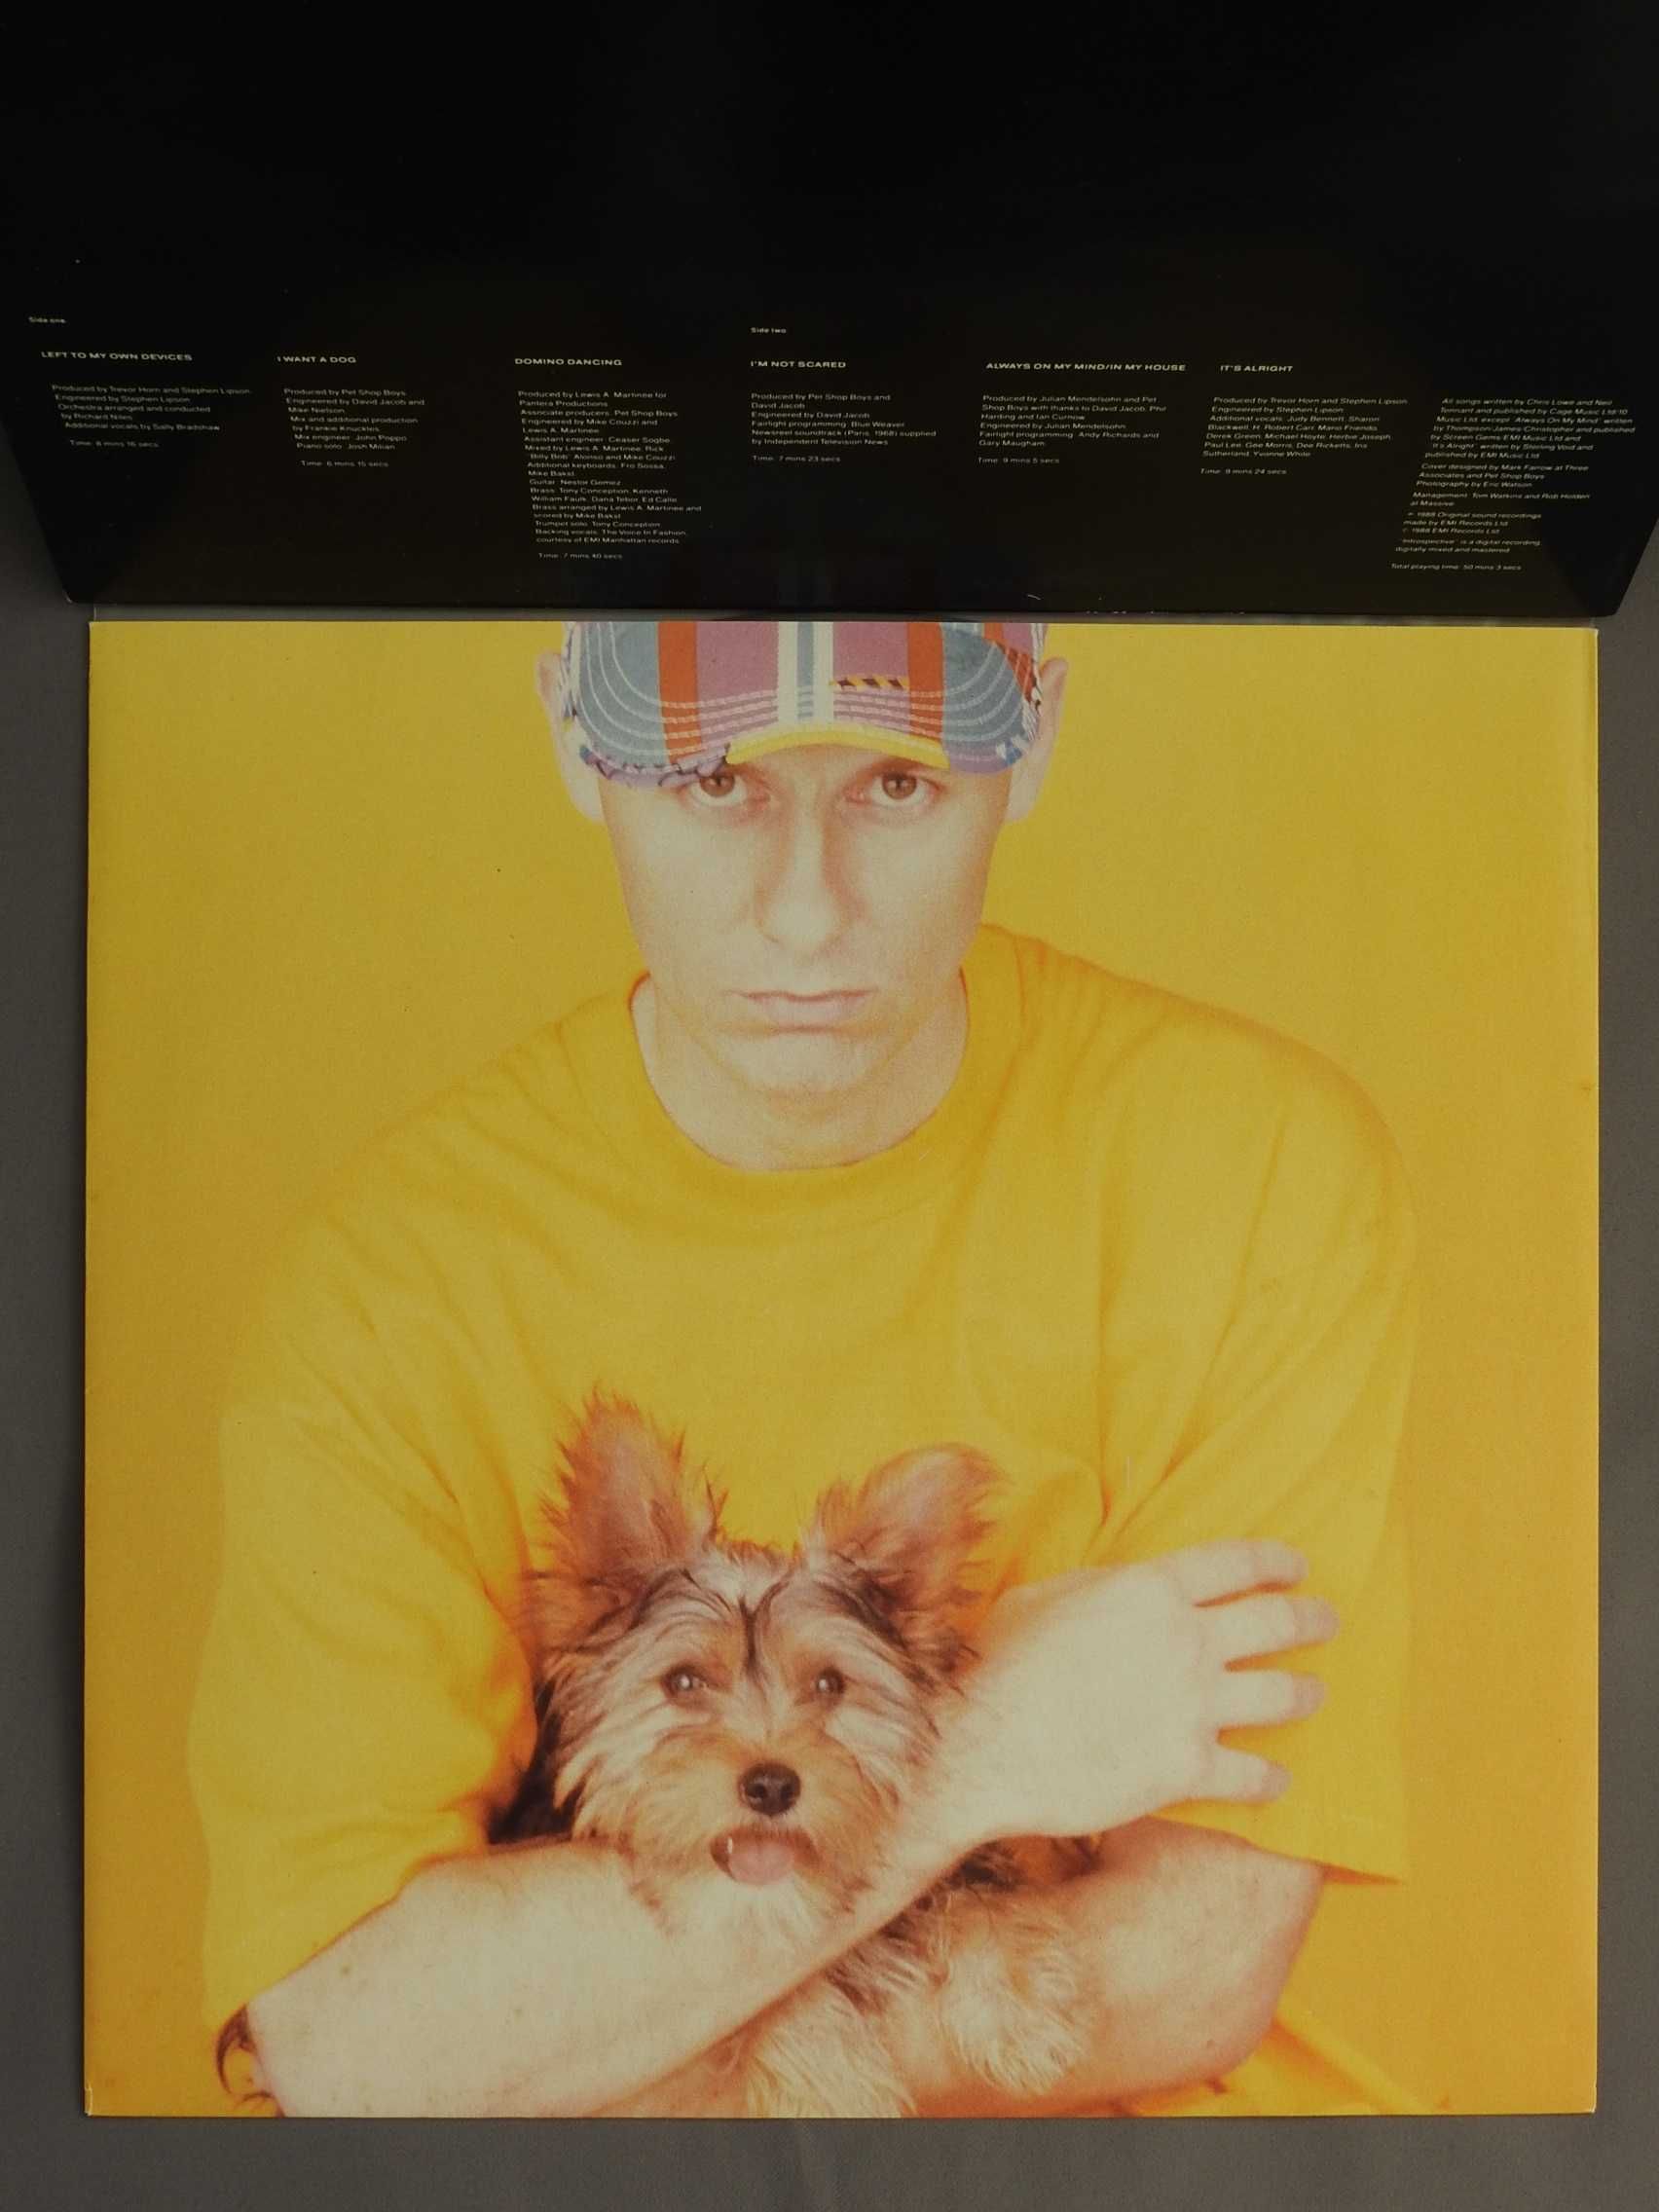 Pet Shop Boys Introspective LP UK пластинка Британия 1988 NM 1 press